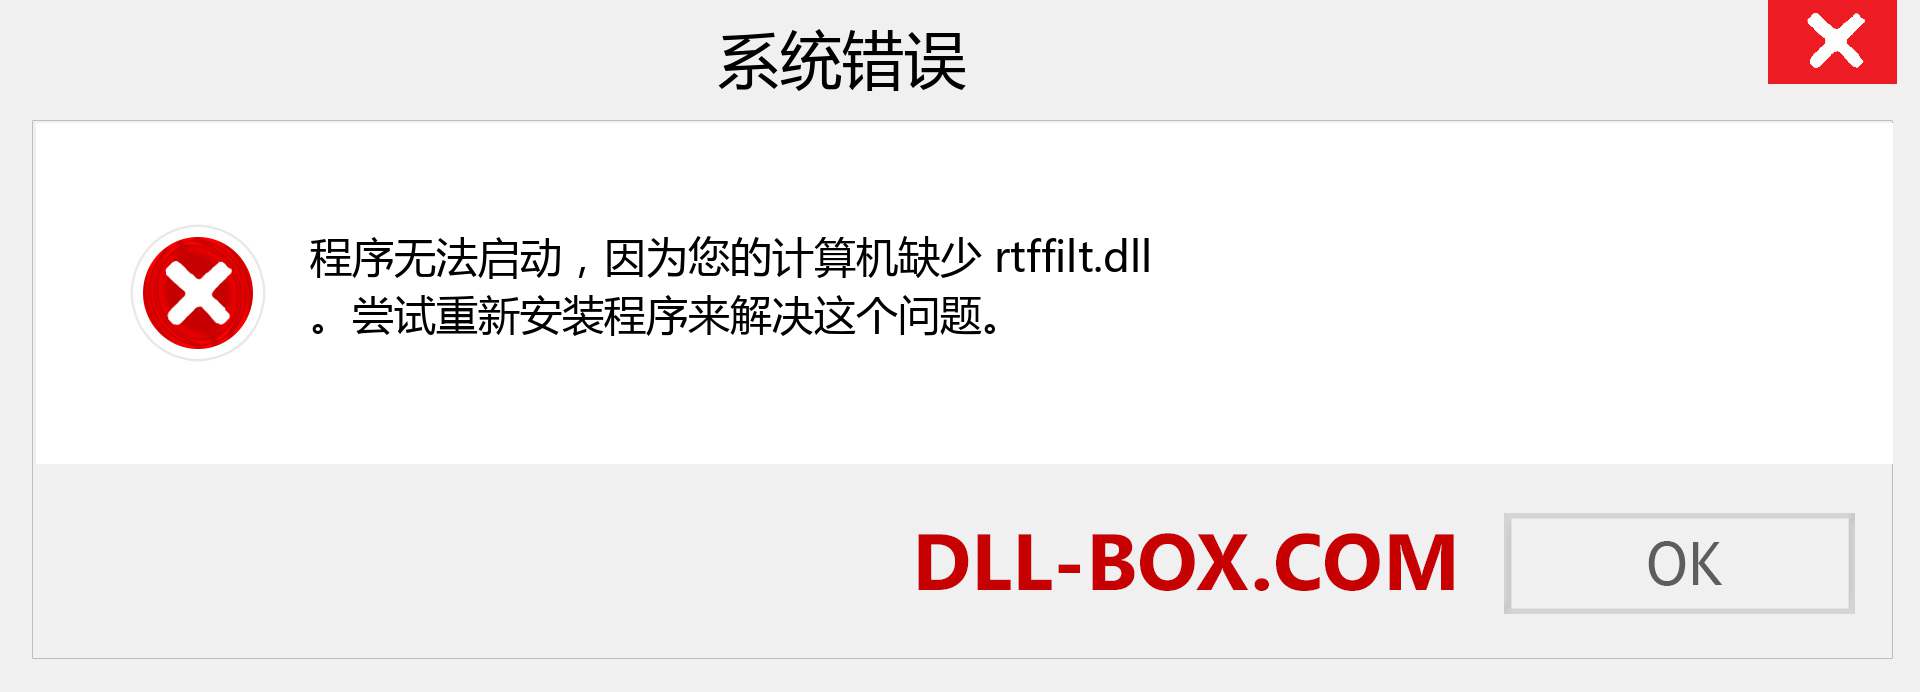 rtffilt.dll 文件丢失？。 适用于 Windows 7、8、10 的下载 - 修复 Windows、照片、图像上的 rtffilt dll 丢失错误